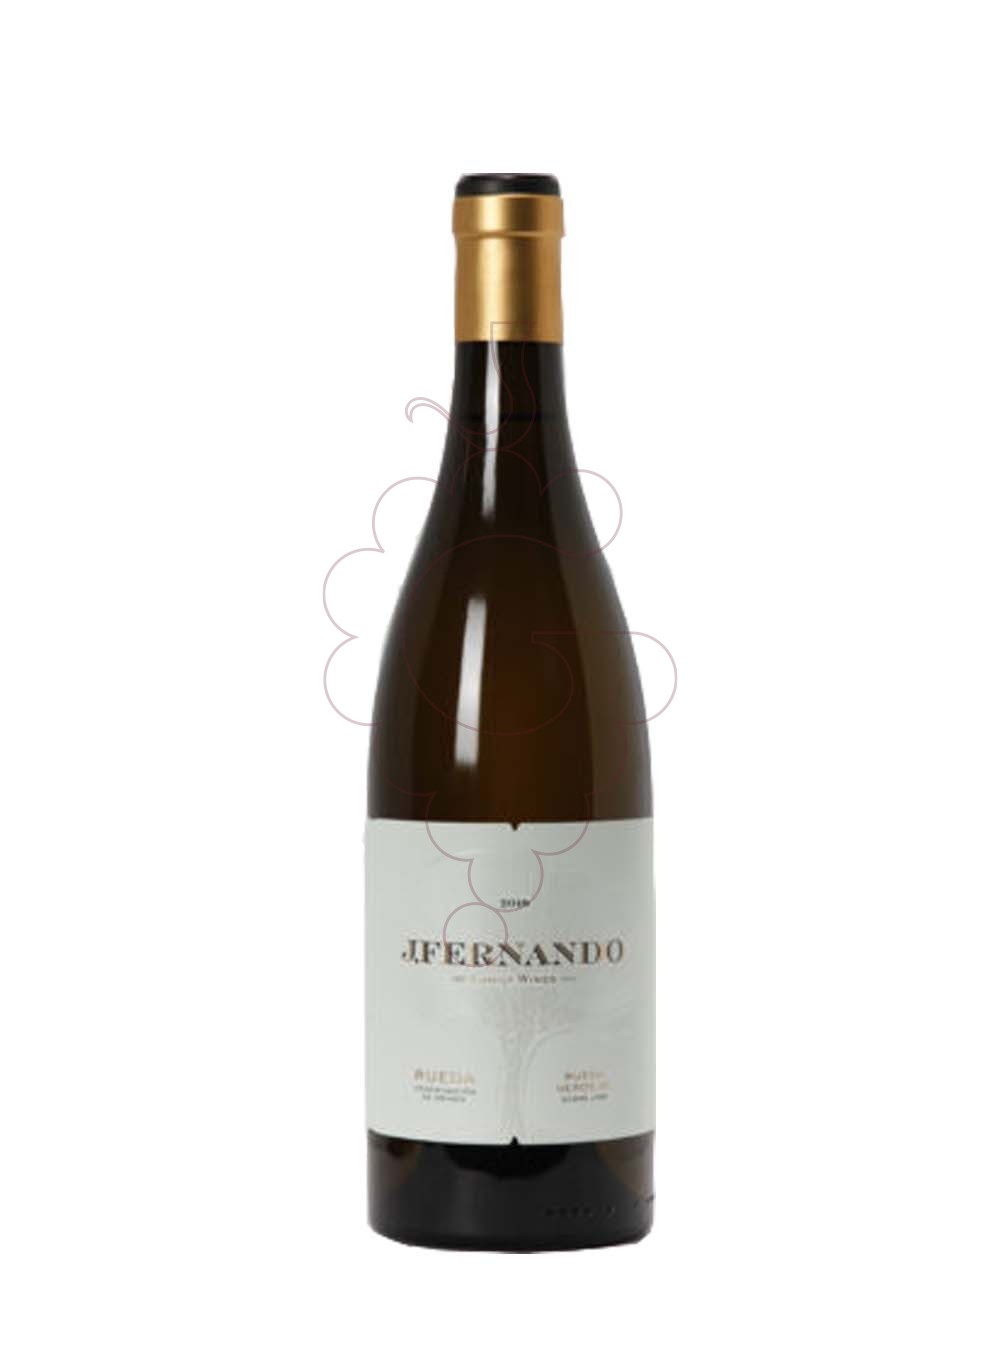 Photo J.fernando verdejo vend.selecc white wine